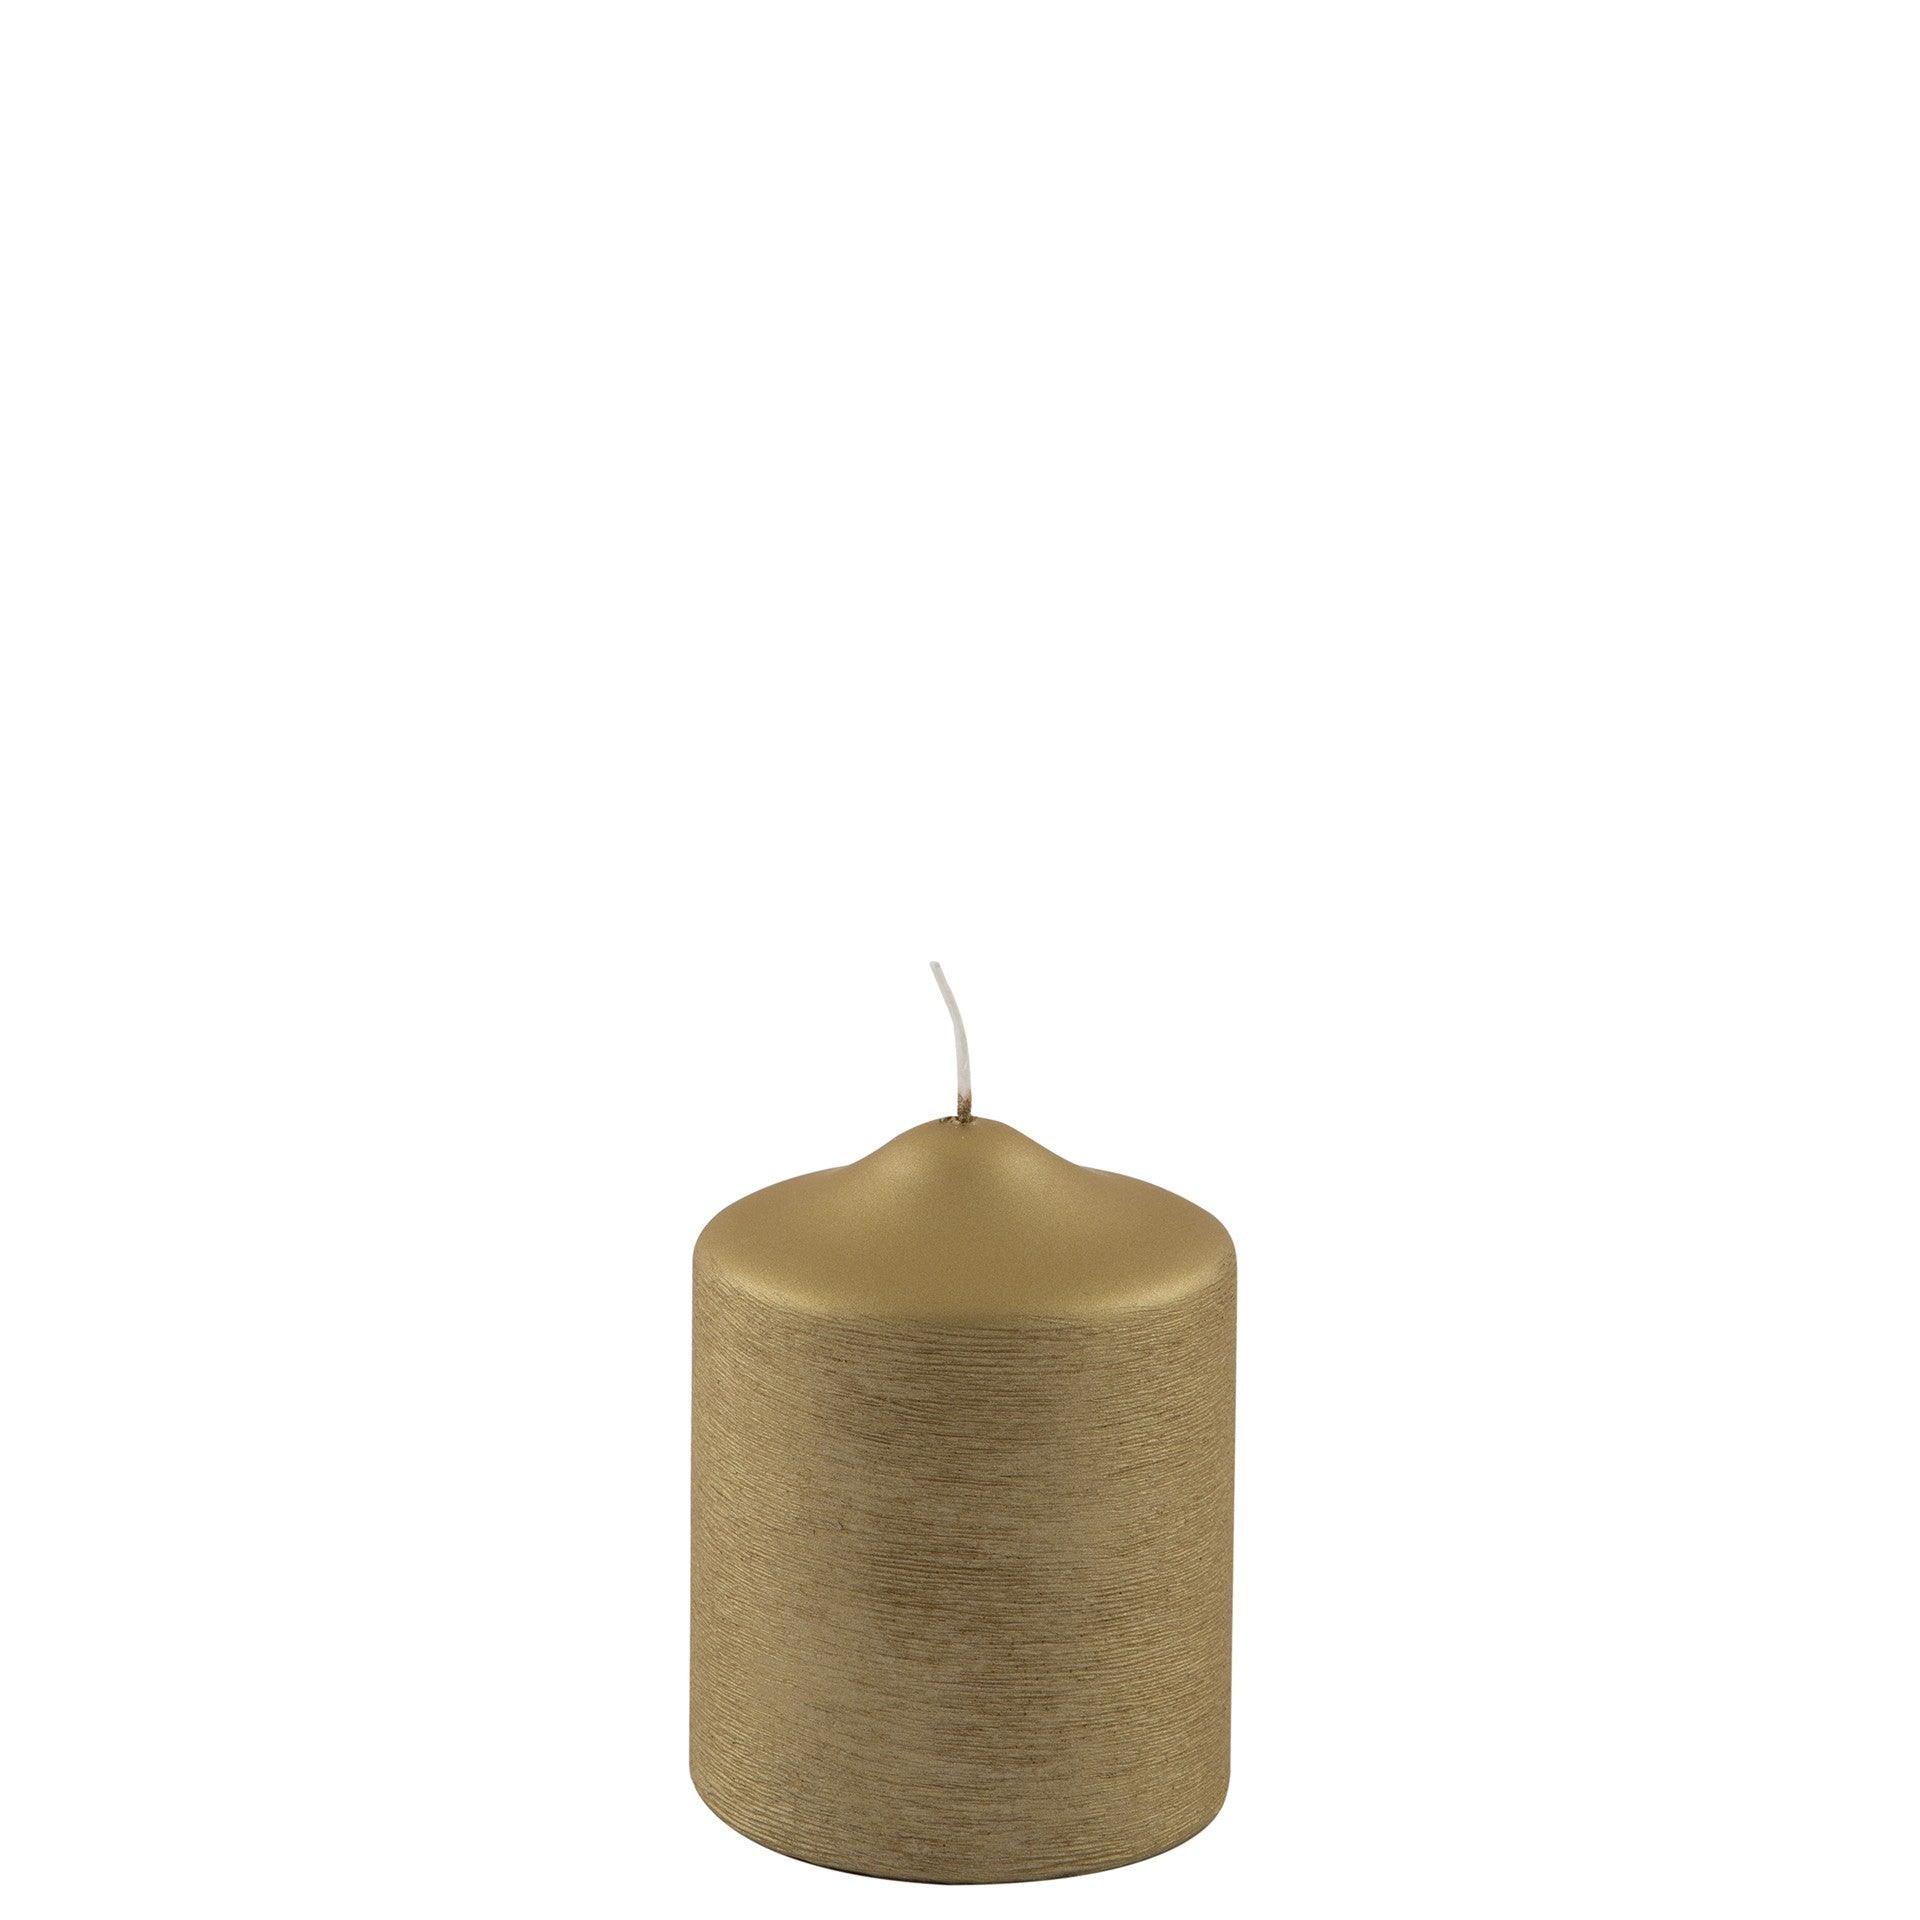 Fink Candle Stumpenkerze metallic gebürstet Gold 10cm - HomeDesign Knaus wir schaffen Inspirationen 